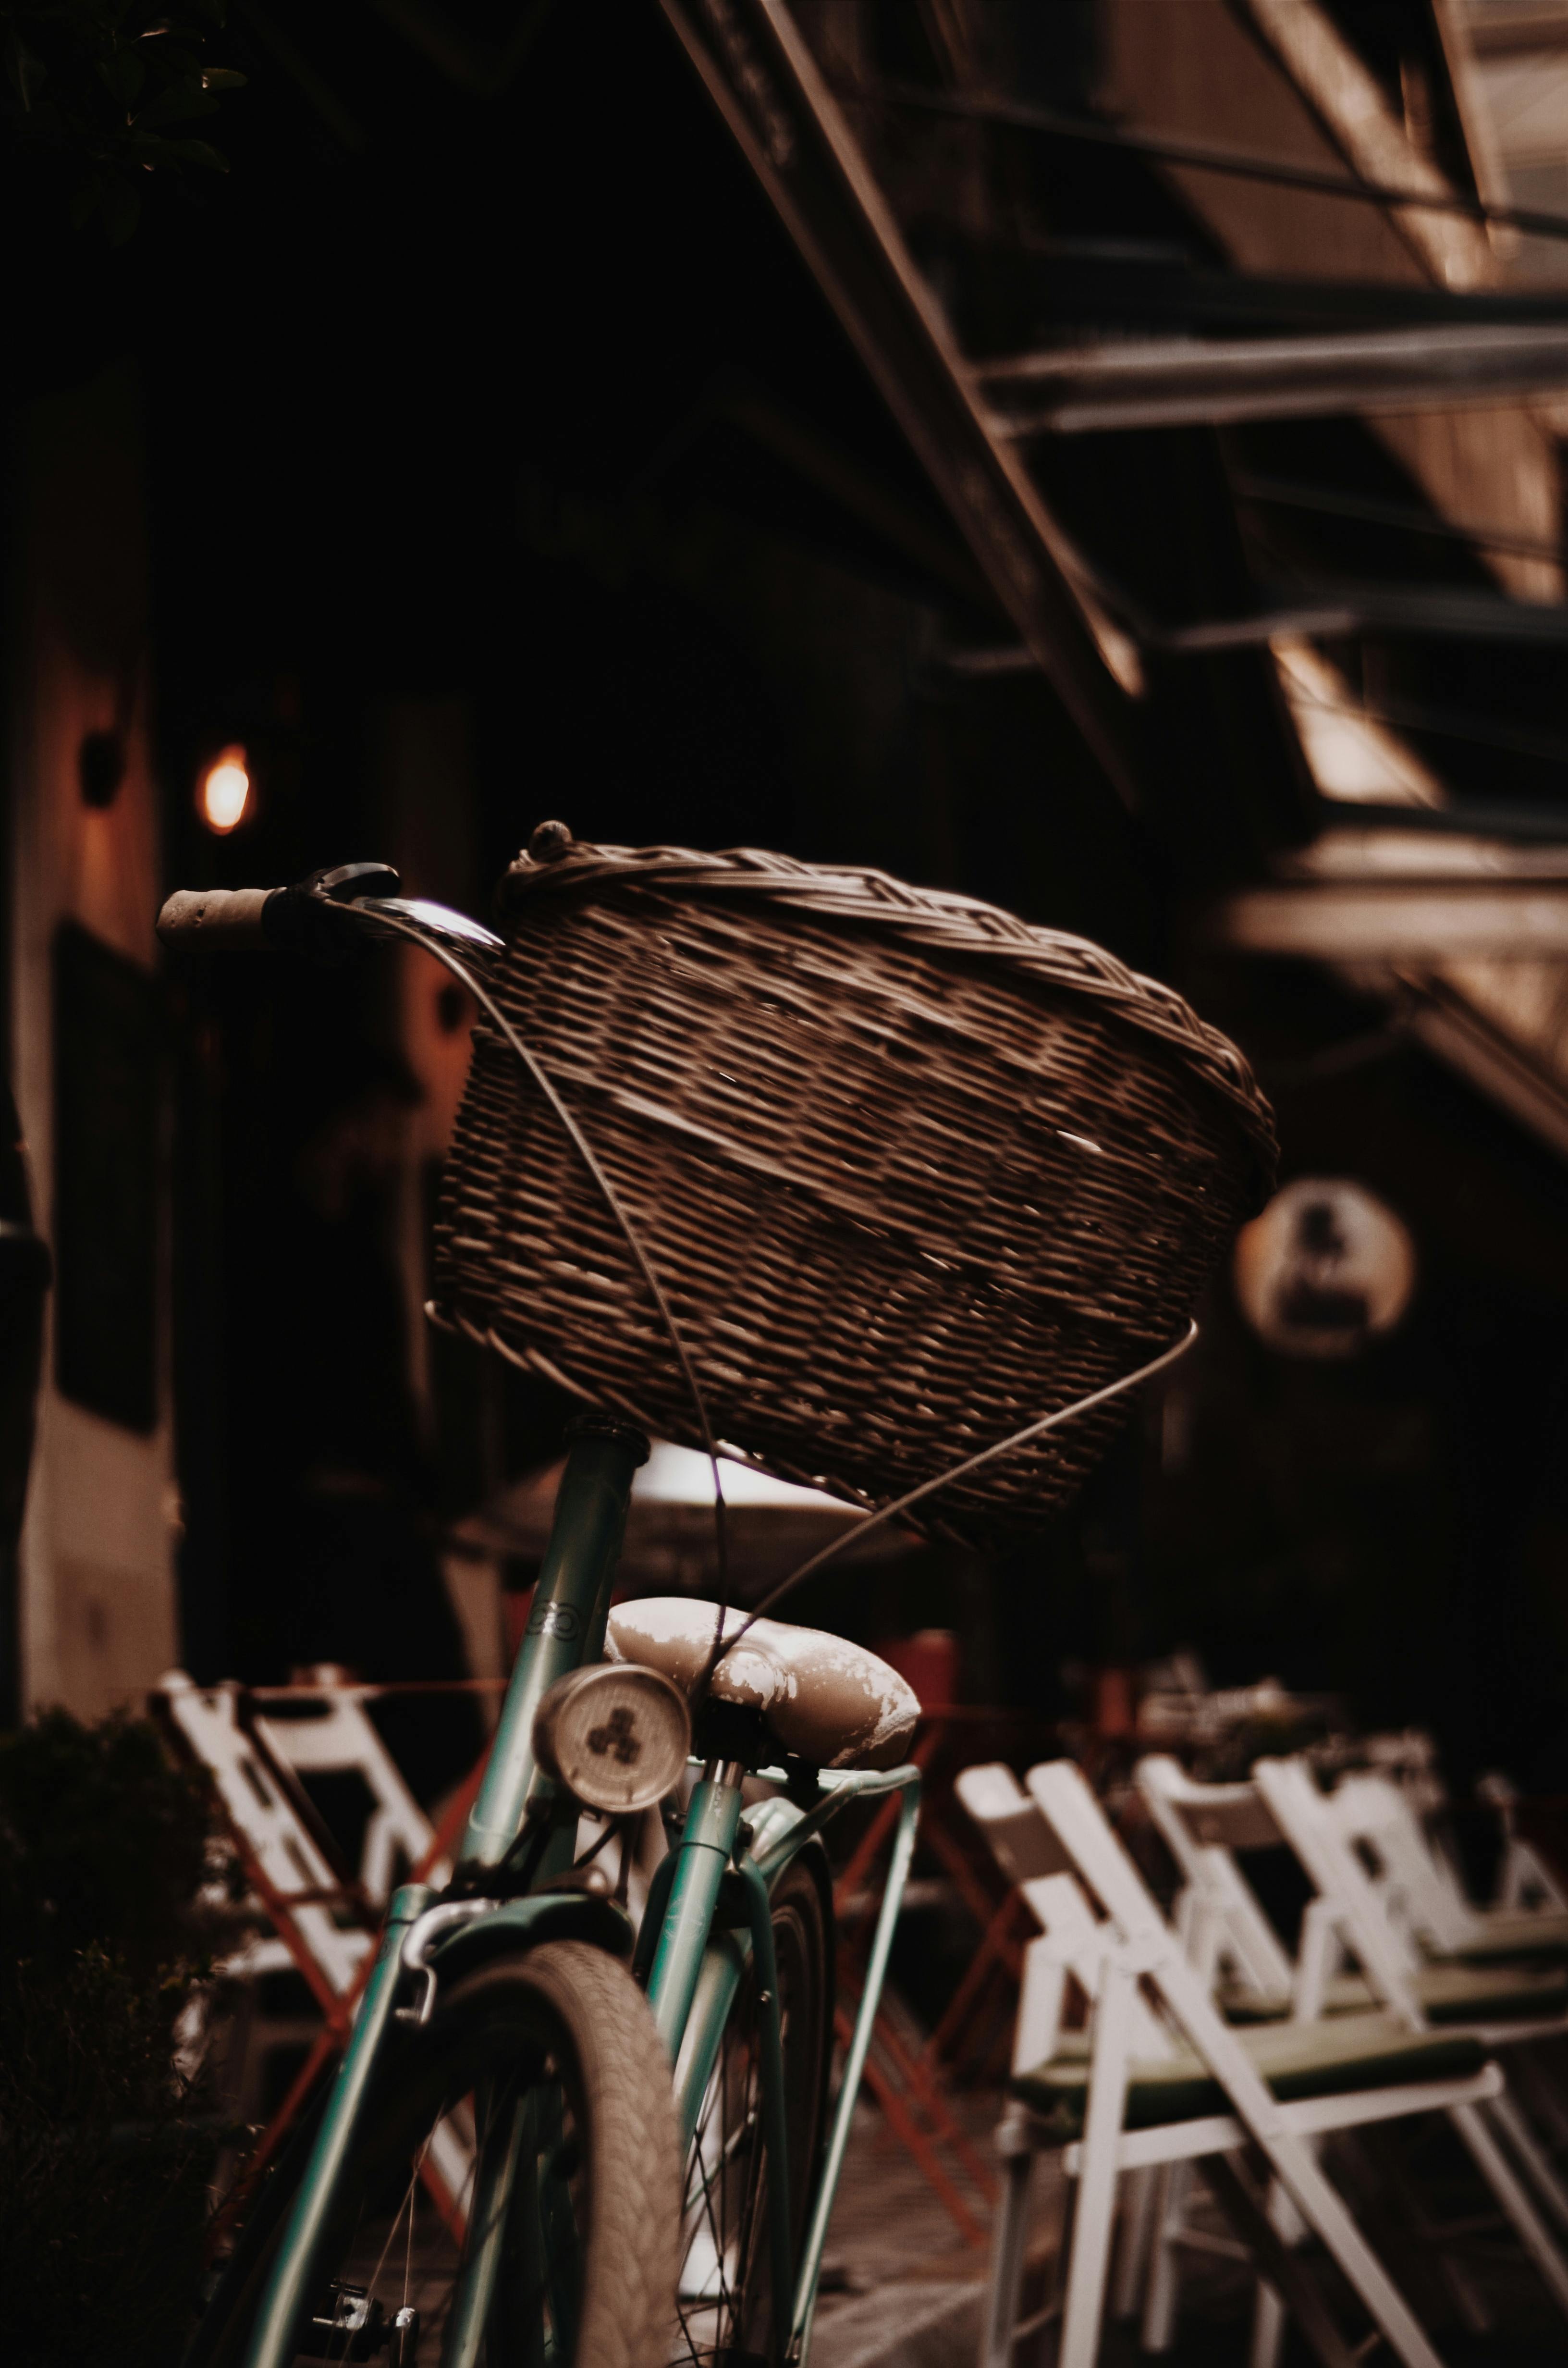 teal bike basket